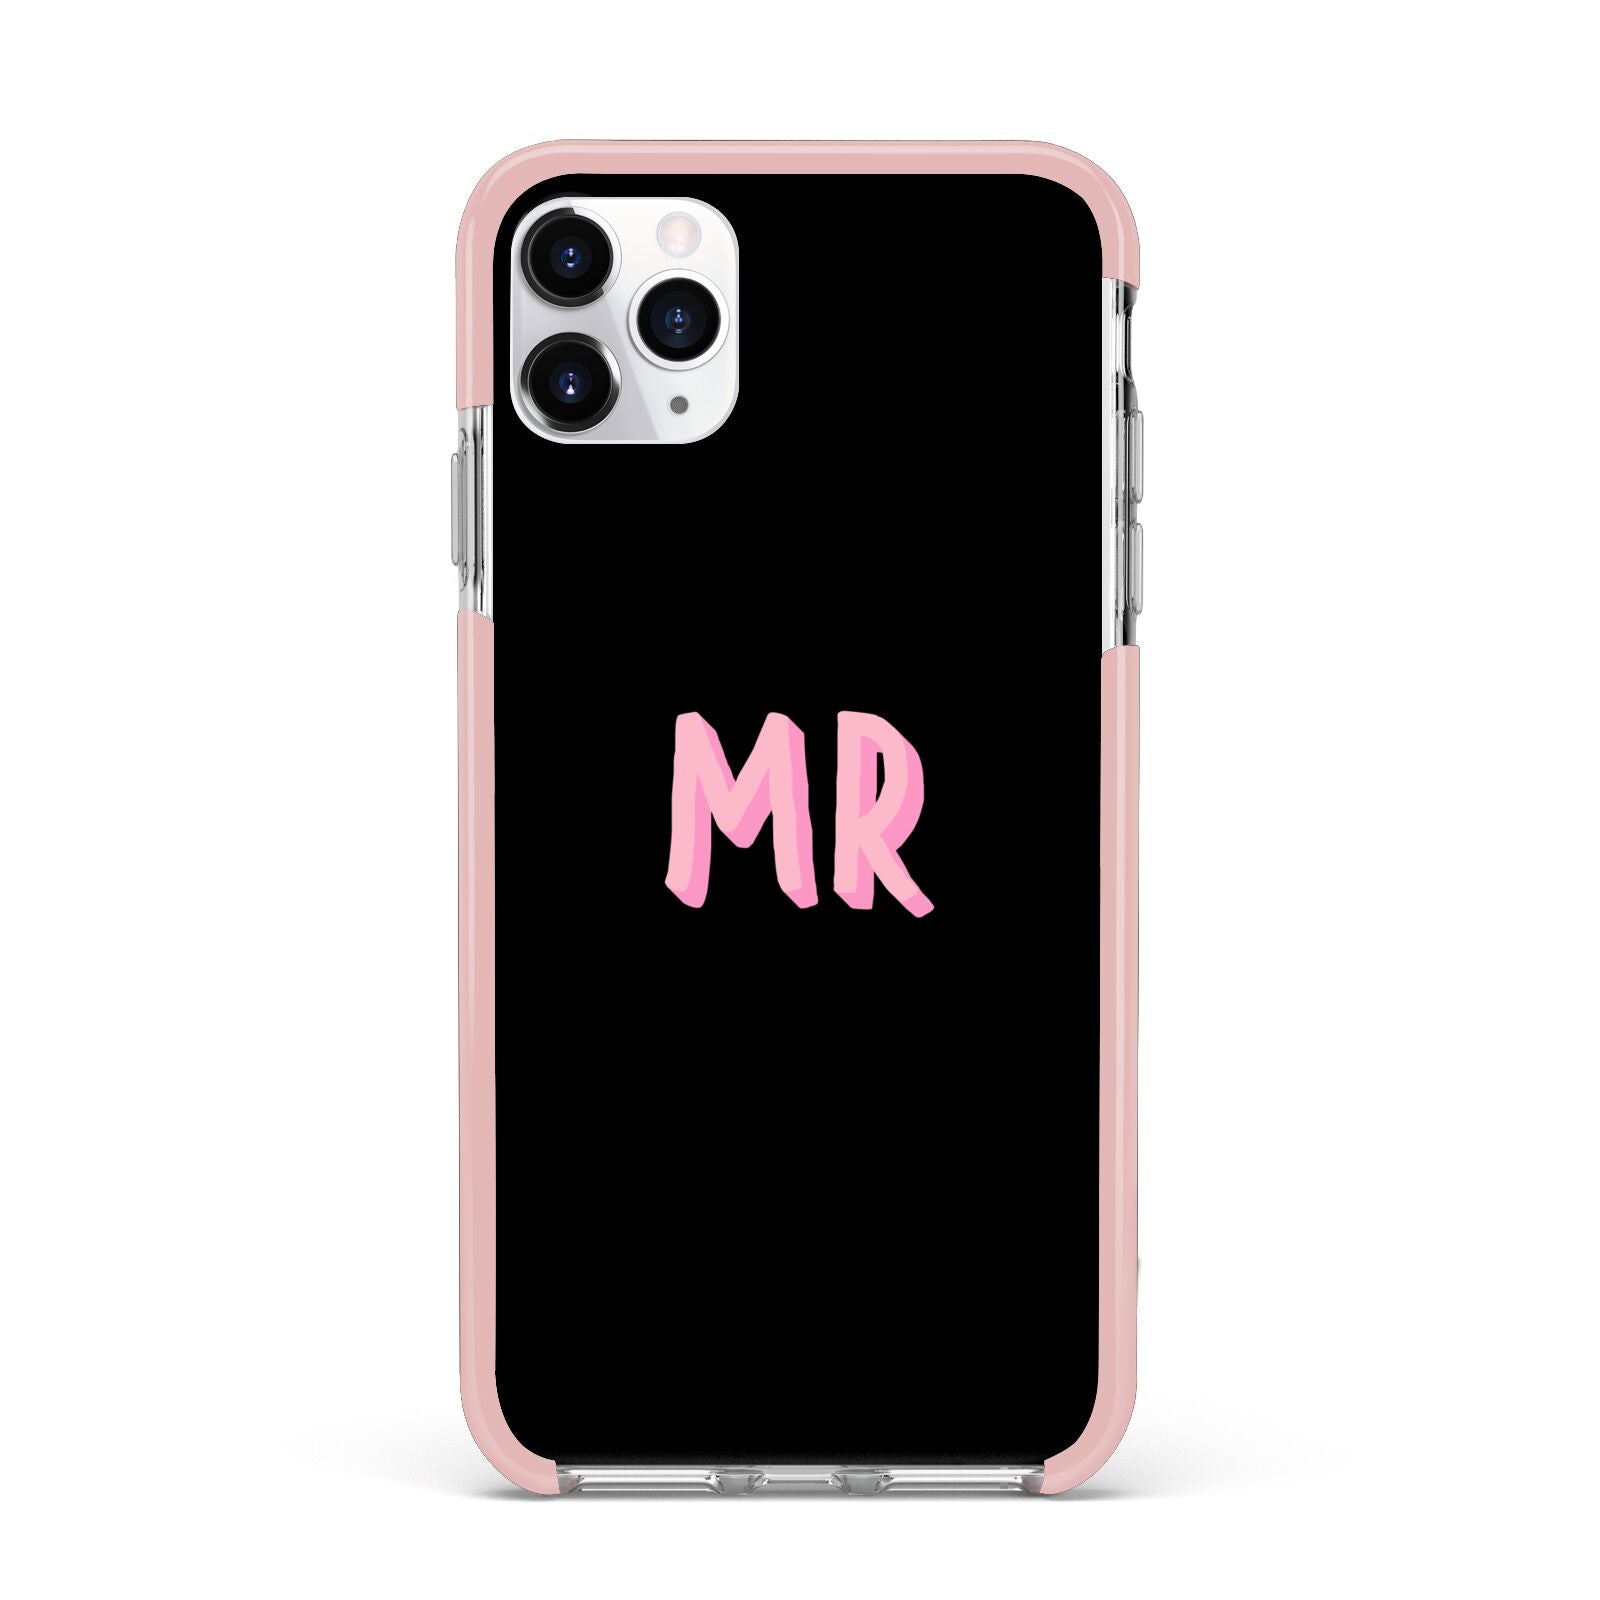 Mr iPhone 11 Pro Max Impact Pink Edge Case